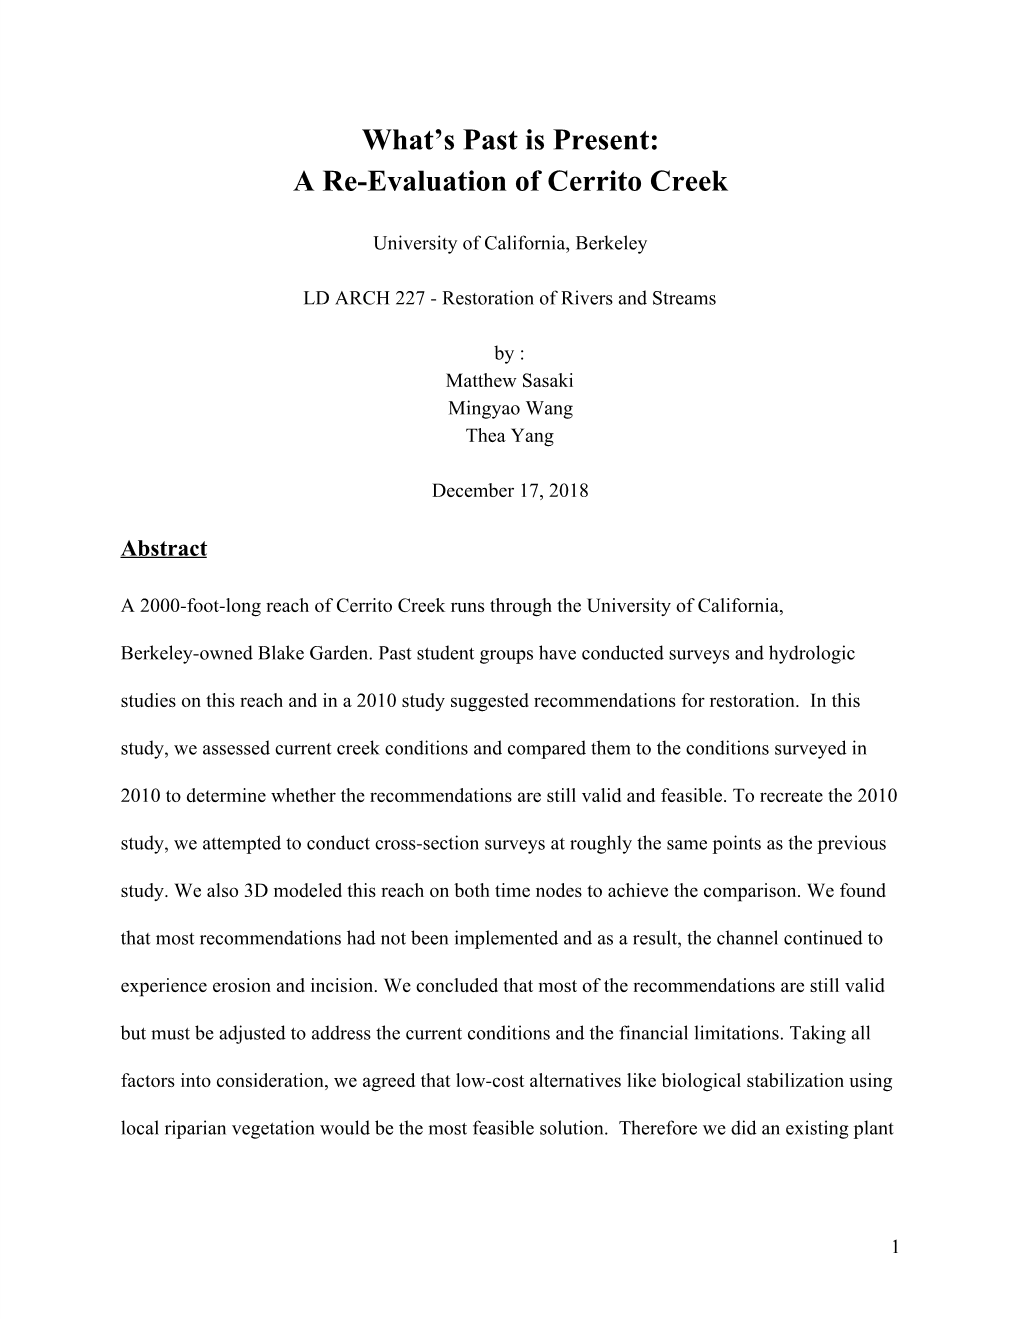 A Re-Evaluation of Cerrito Creek